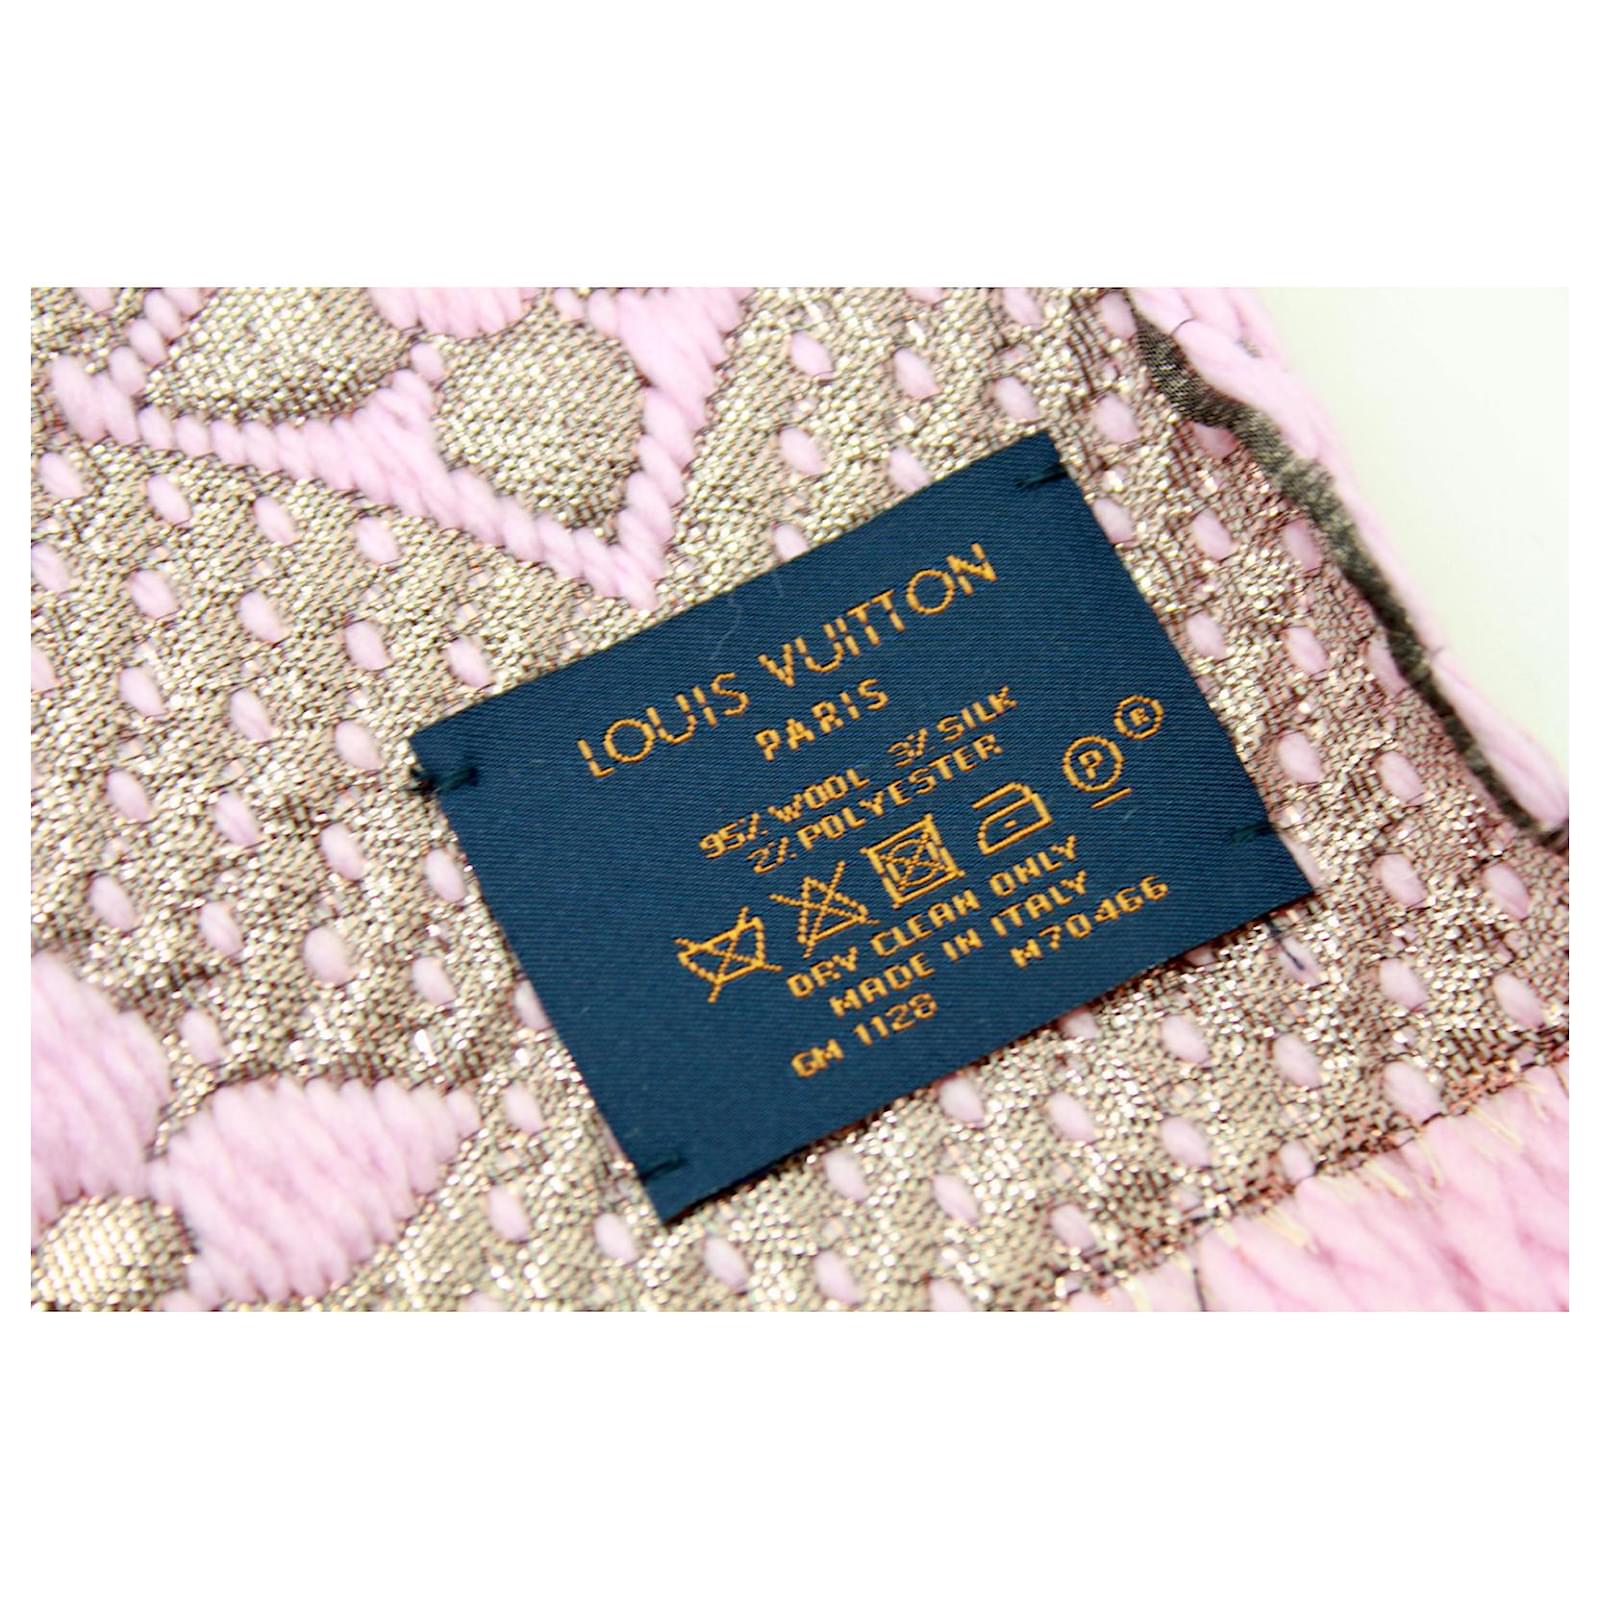 Louis Vuitton Logomania Shine Wool Scarf Red Lurex (M75832)